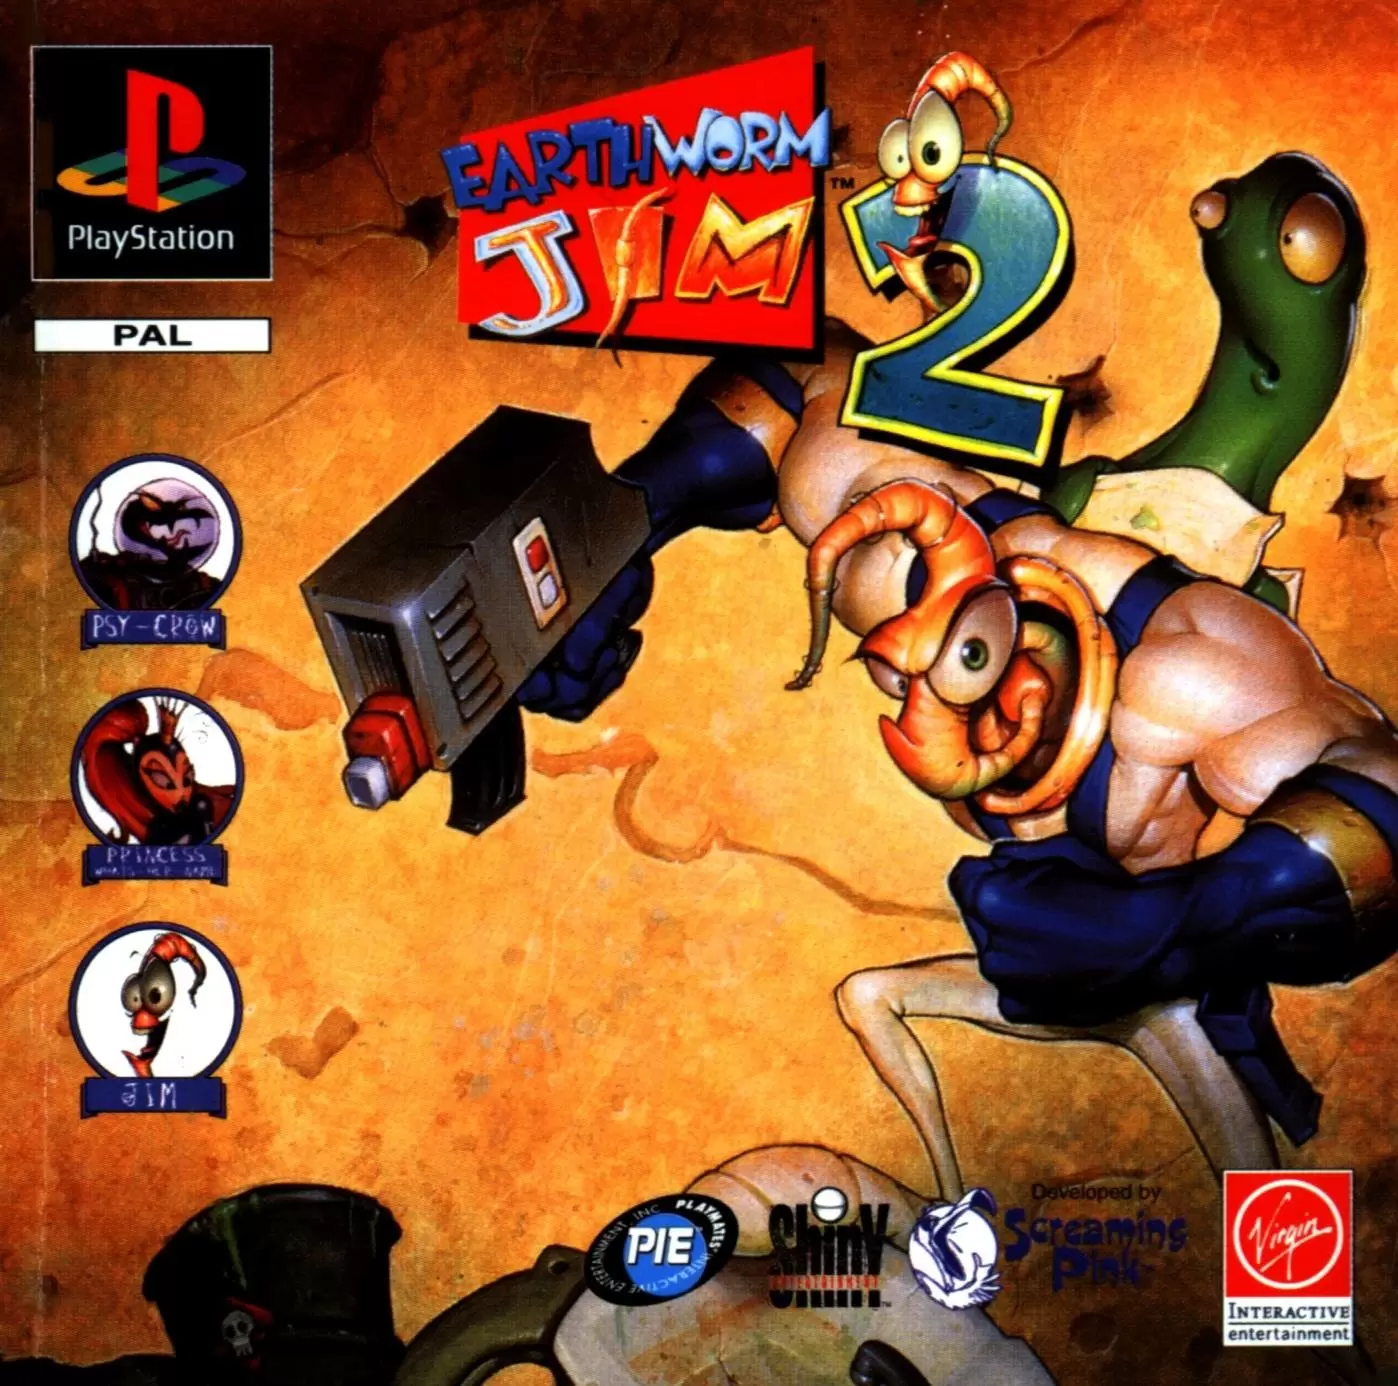 Playstation games - Earthworm Jim 2